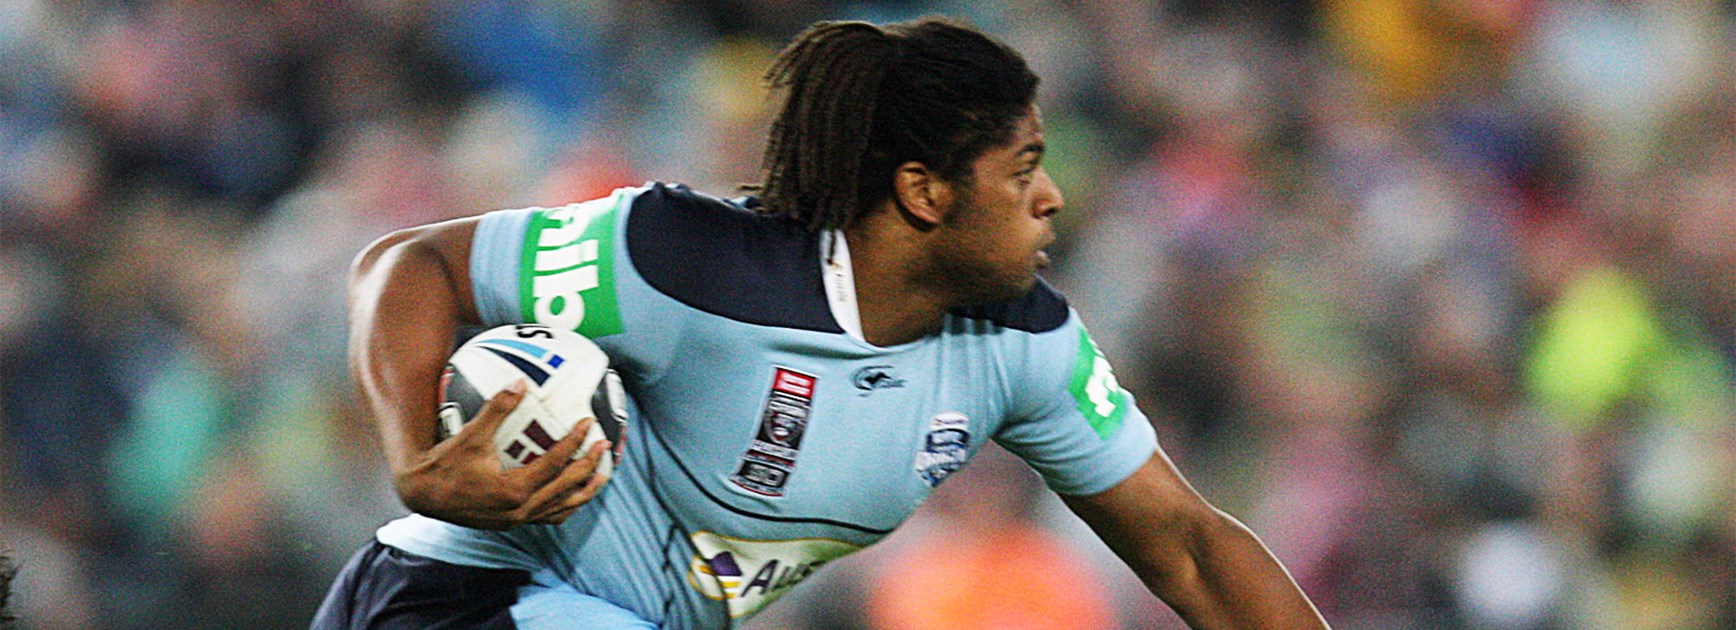 Jamal Idris in action for NSW Origin in 2010.